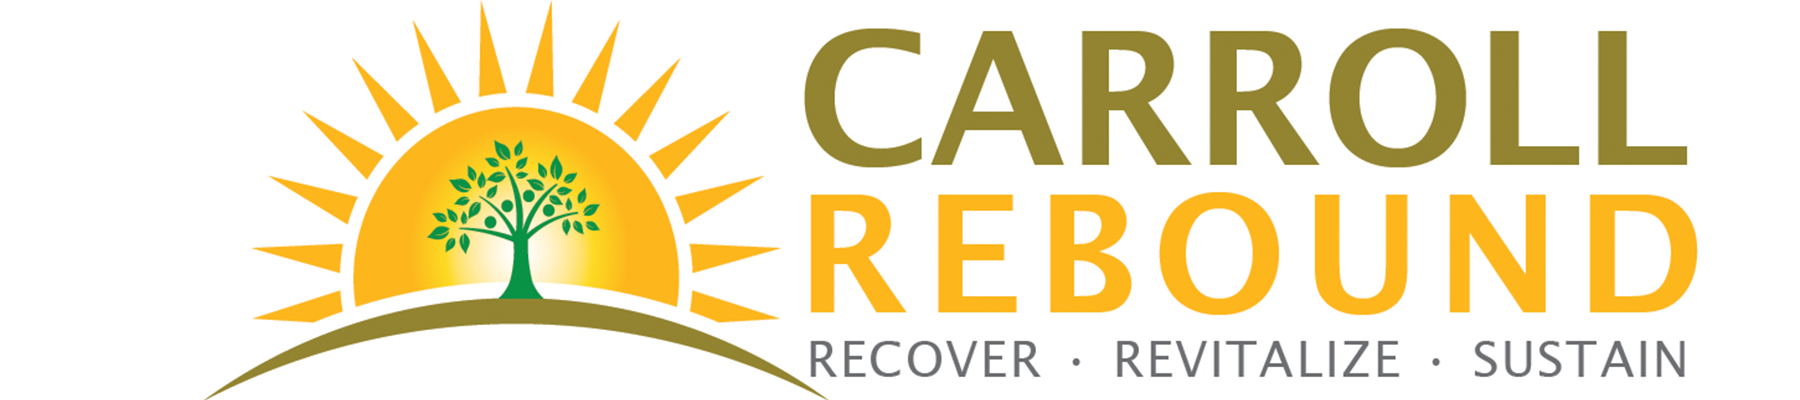 Carroll Rebound Business Grant Application Deadline is September 30th